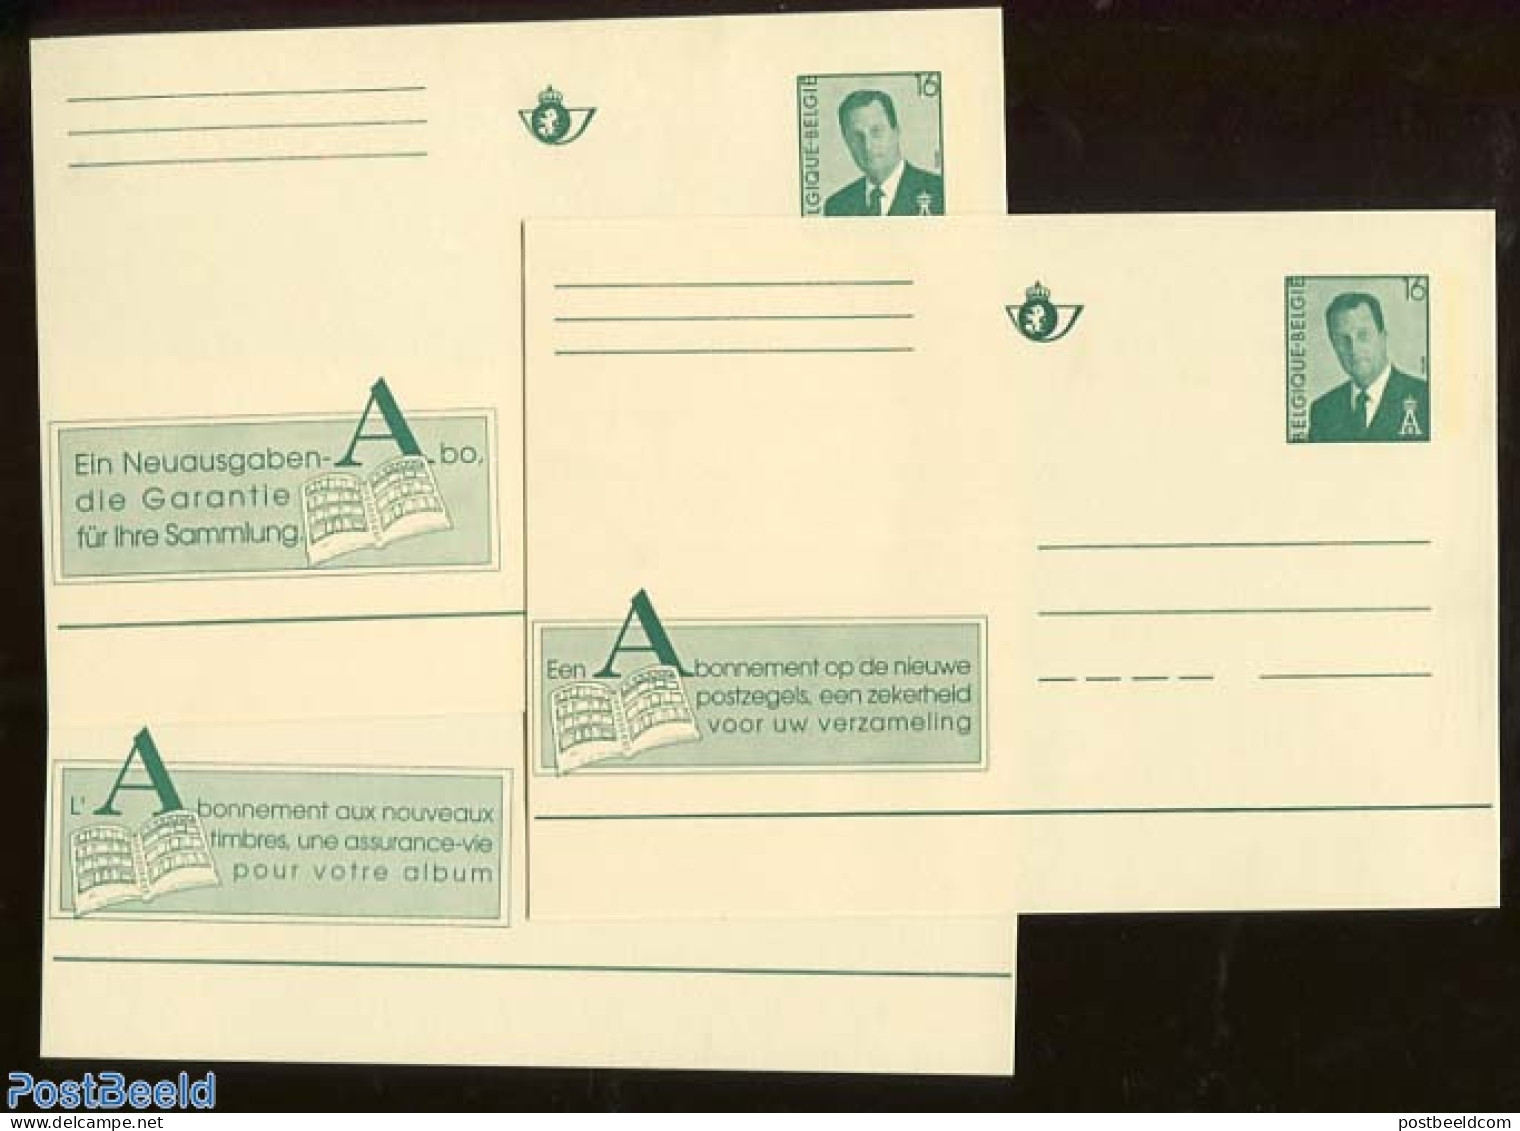 Belgium 1996 Postcard Set, Stamp Subscriptions (3 Cards), Unused Postal Stationary, Philately - Storia Postale